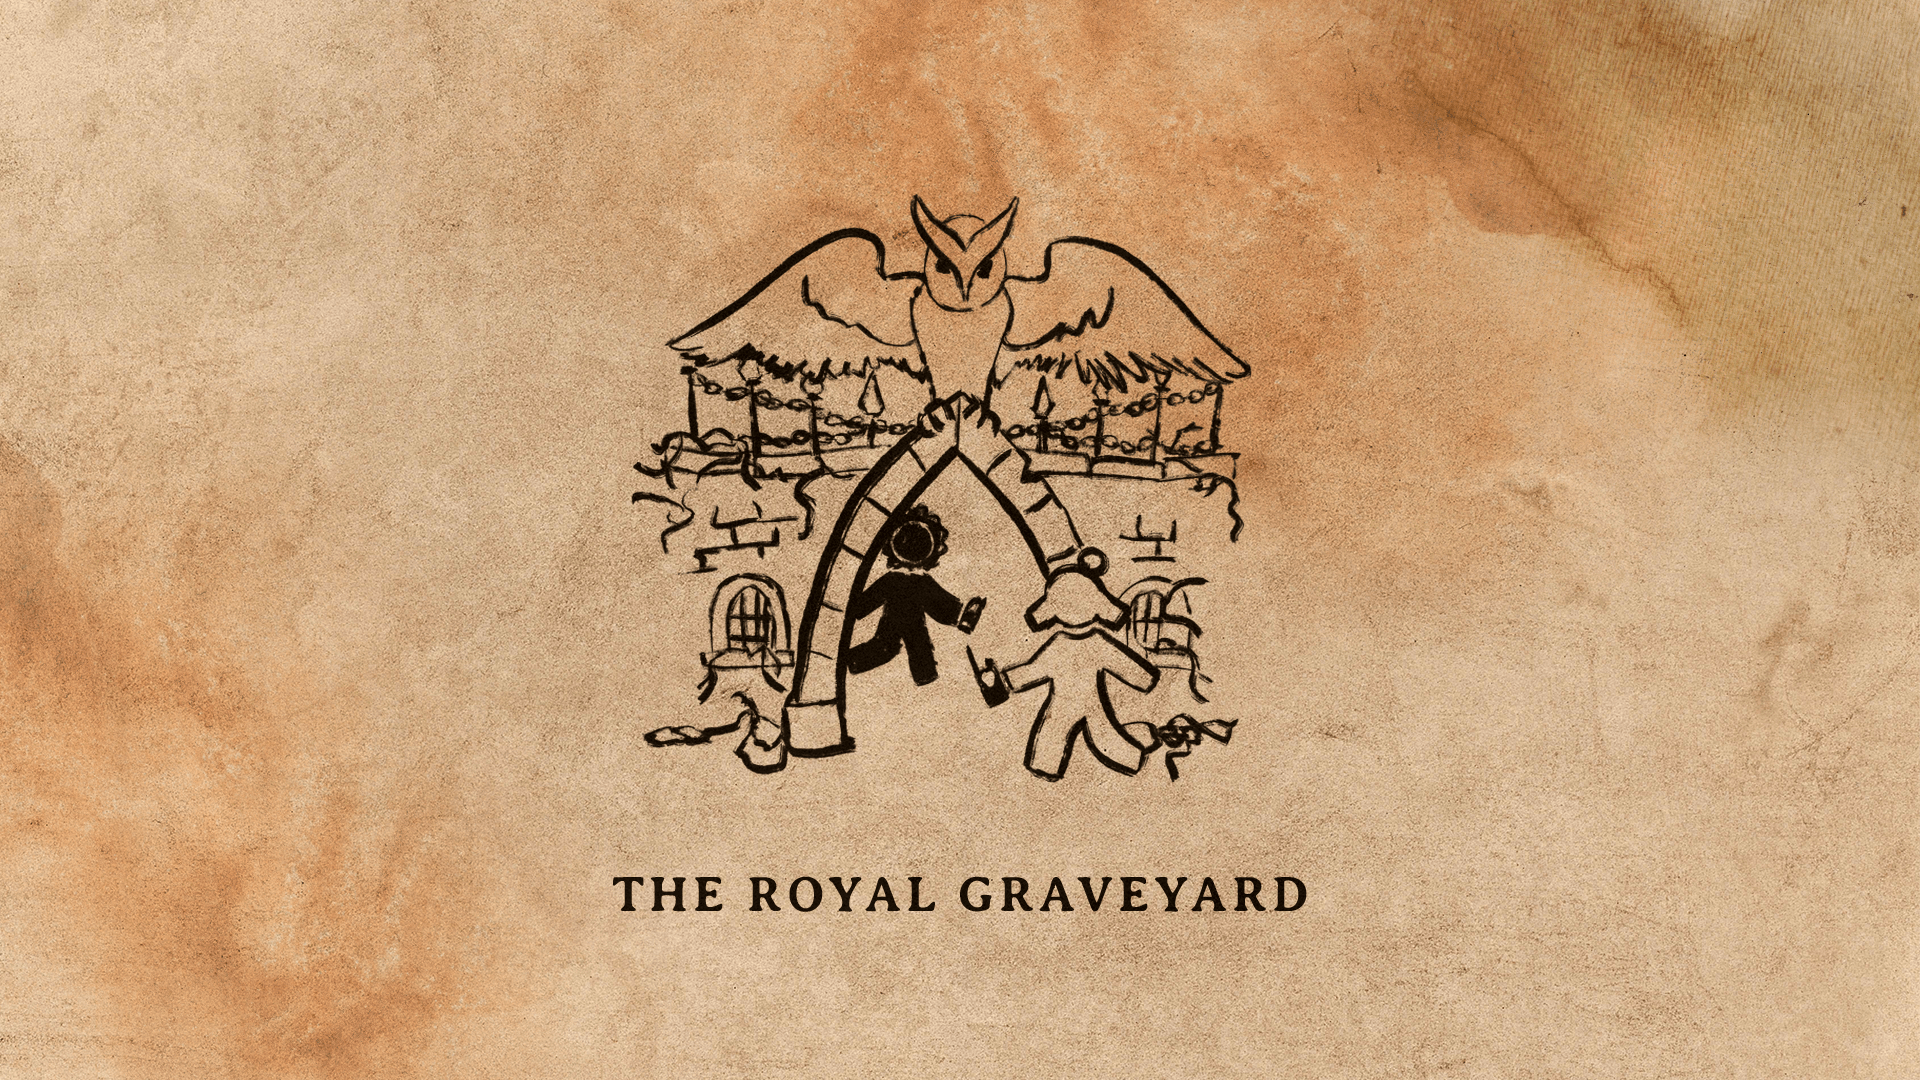 The Royal Graveyard